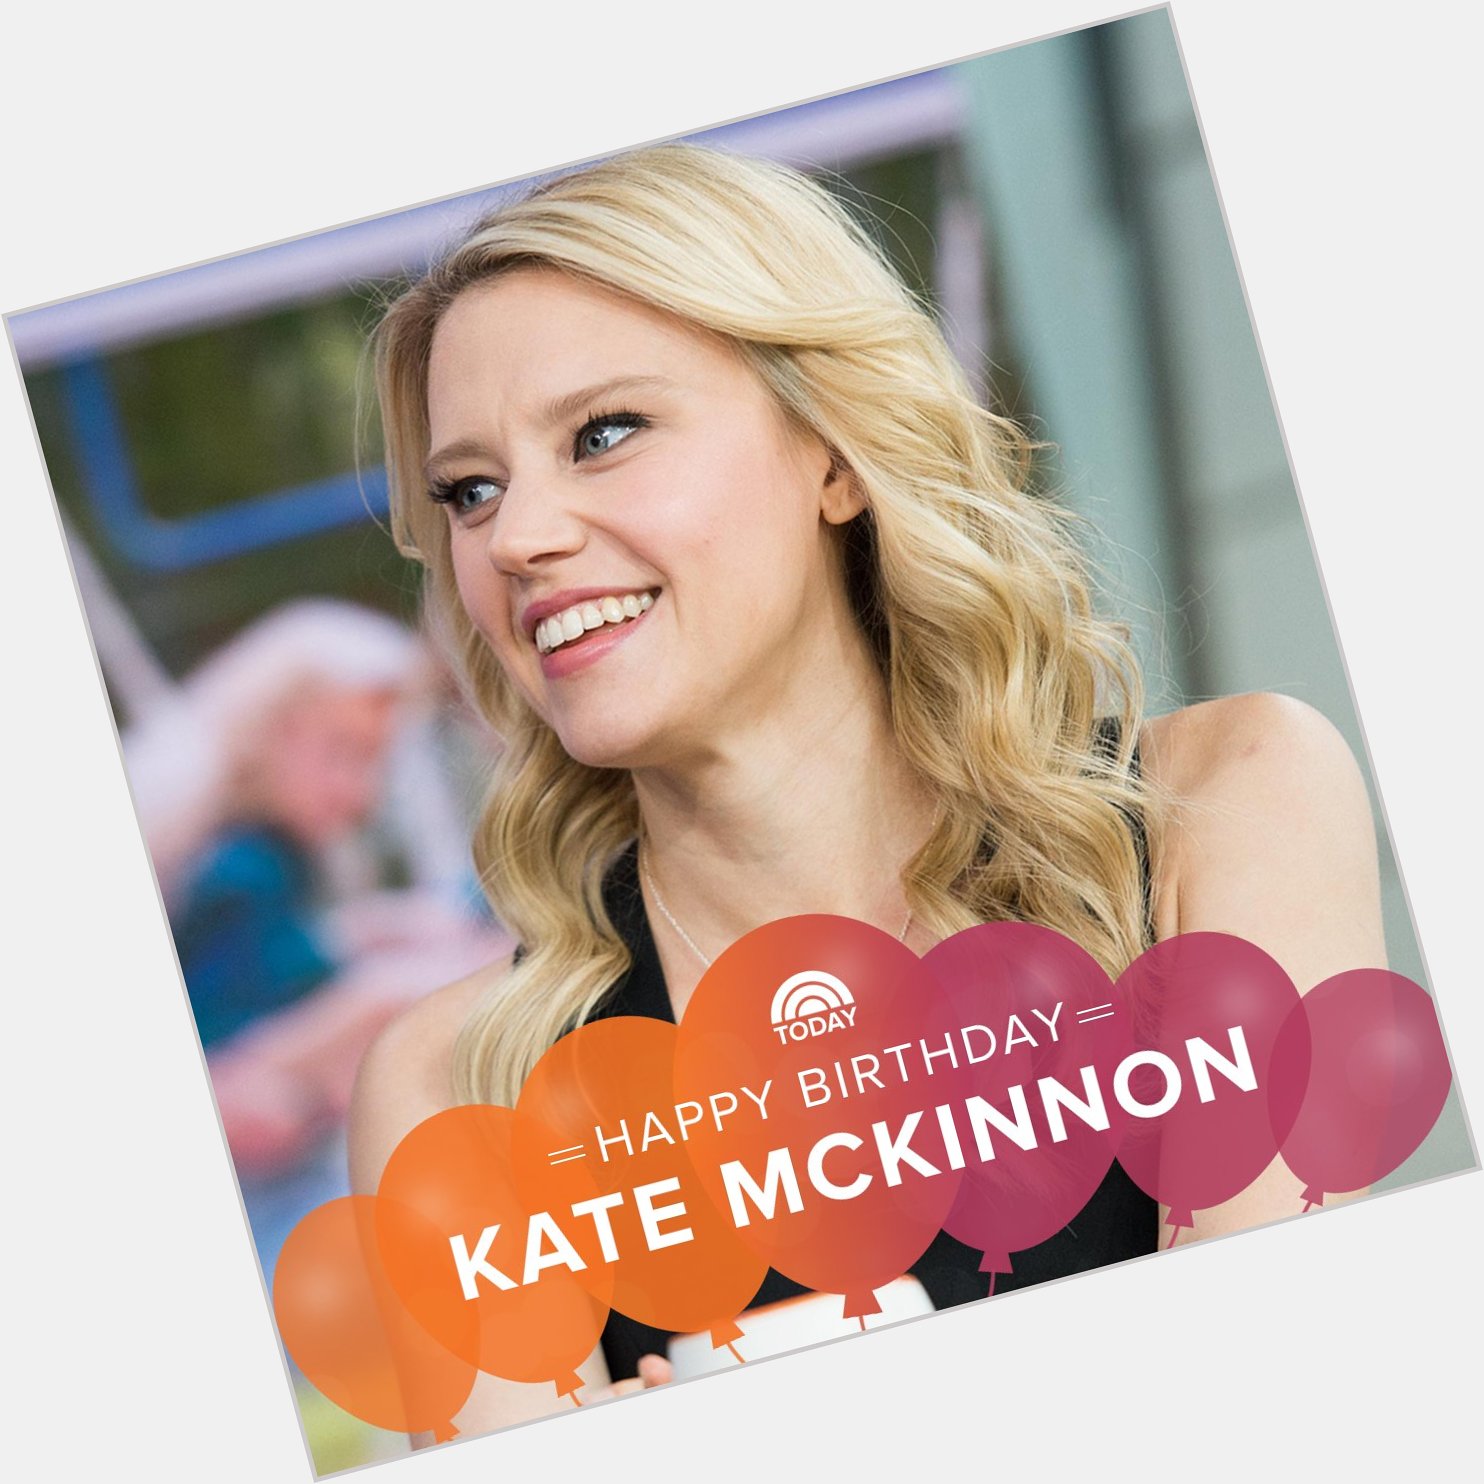 Happy birthday, Kate McKinnon!  